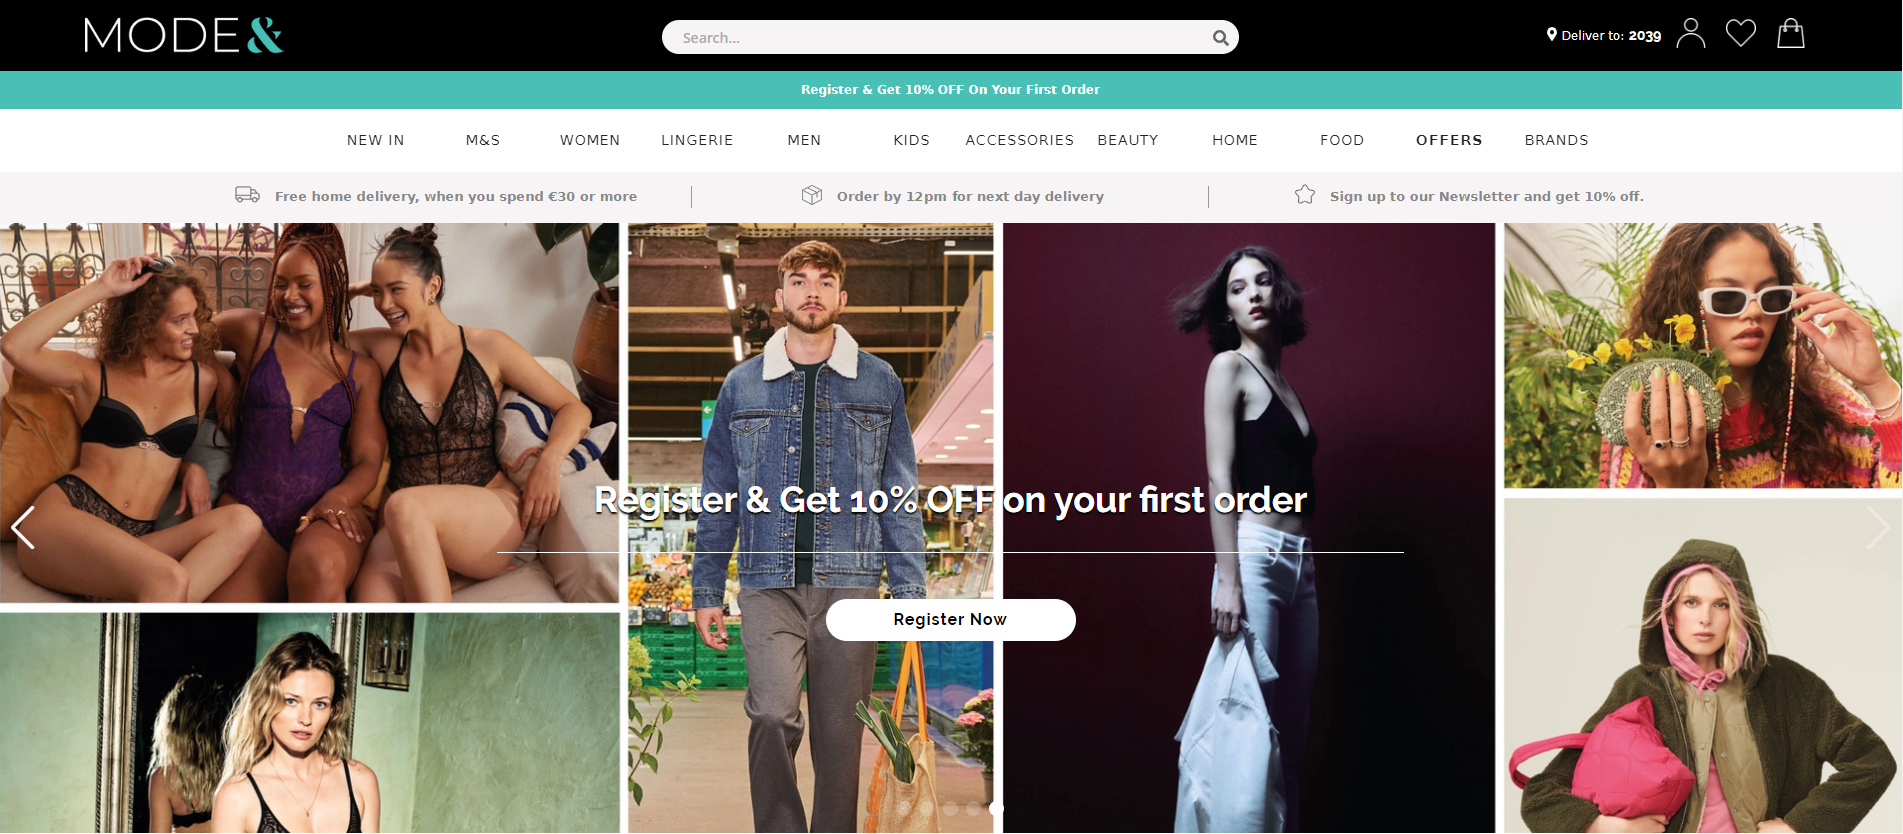 MODE&: Το νέο marketplace με όλα τα brands του Ομίλου VLM